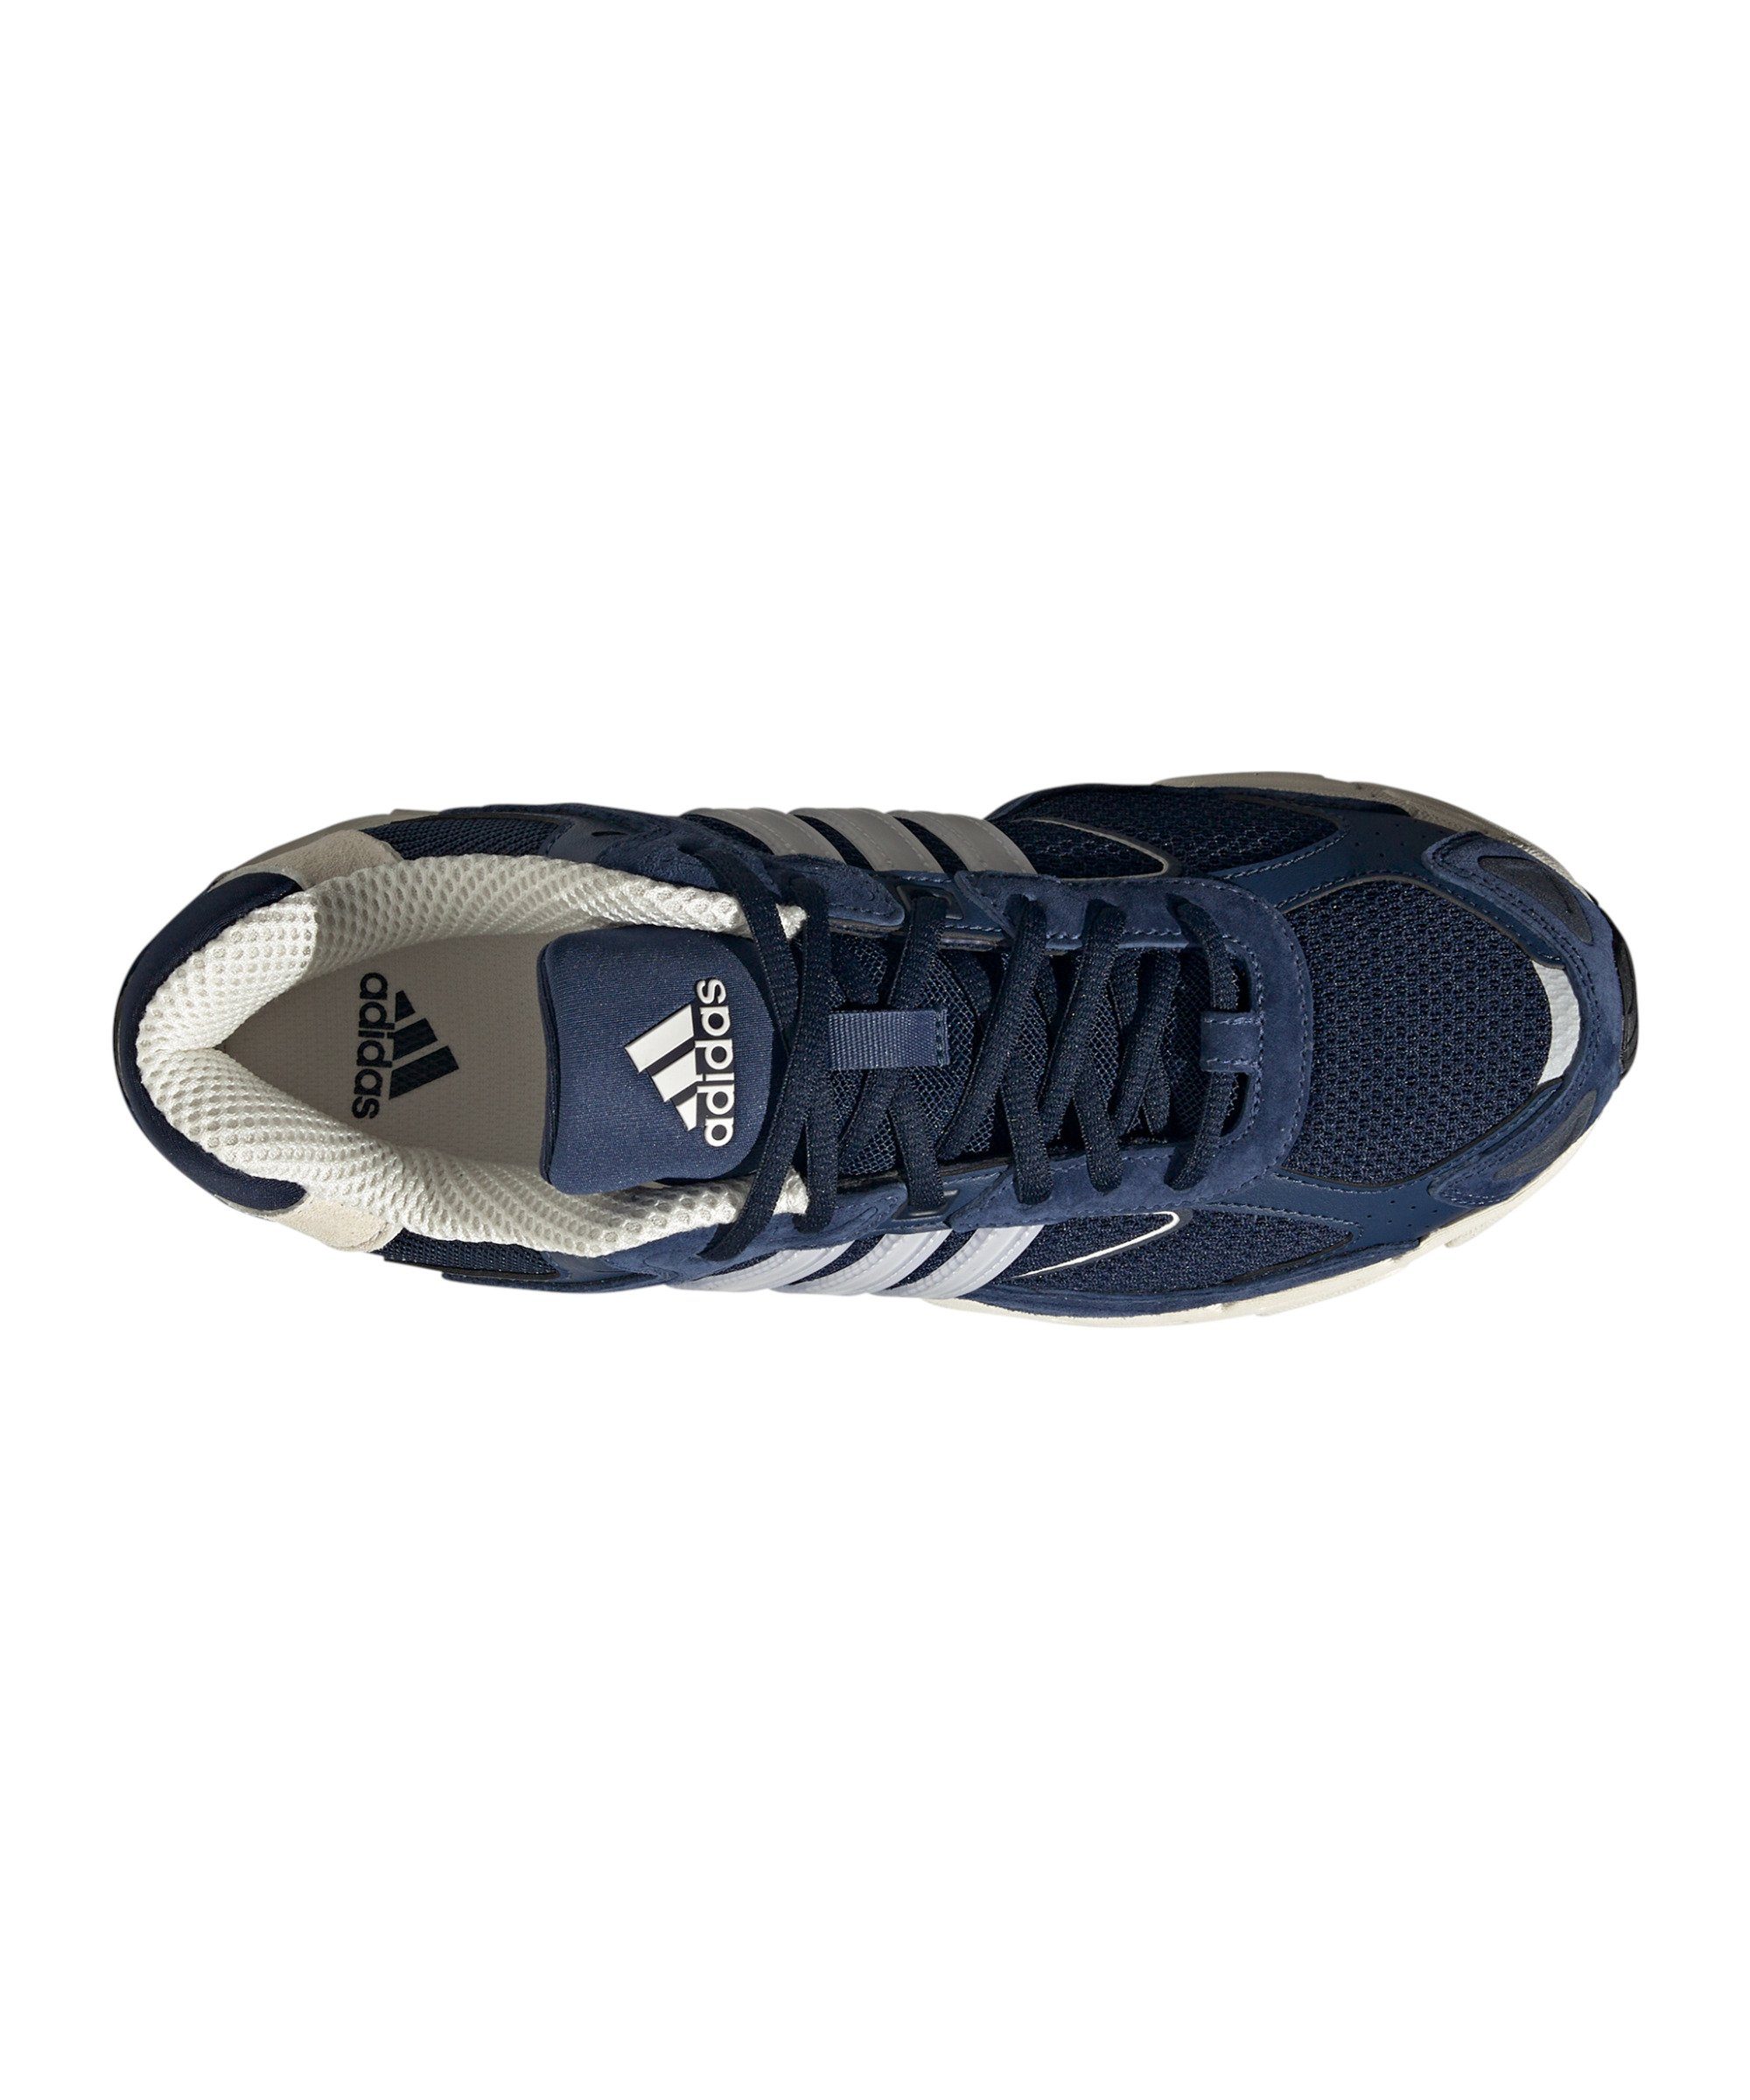 blaublau Beige Originals Sneaker adidas Response CL